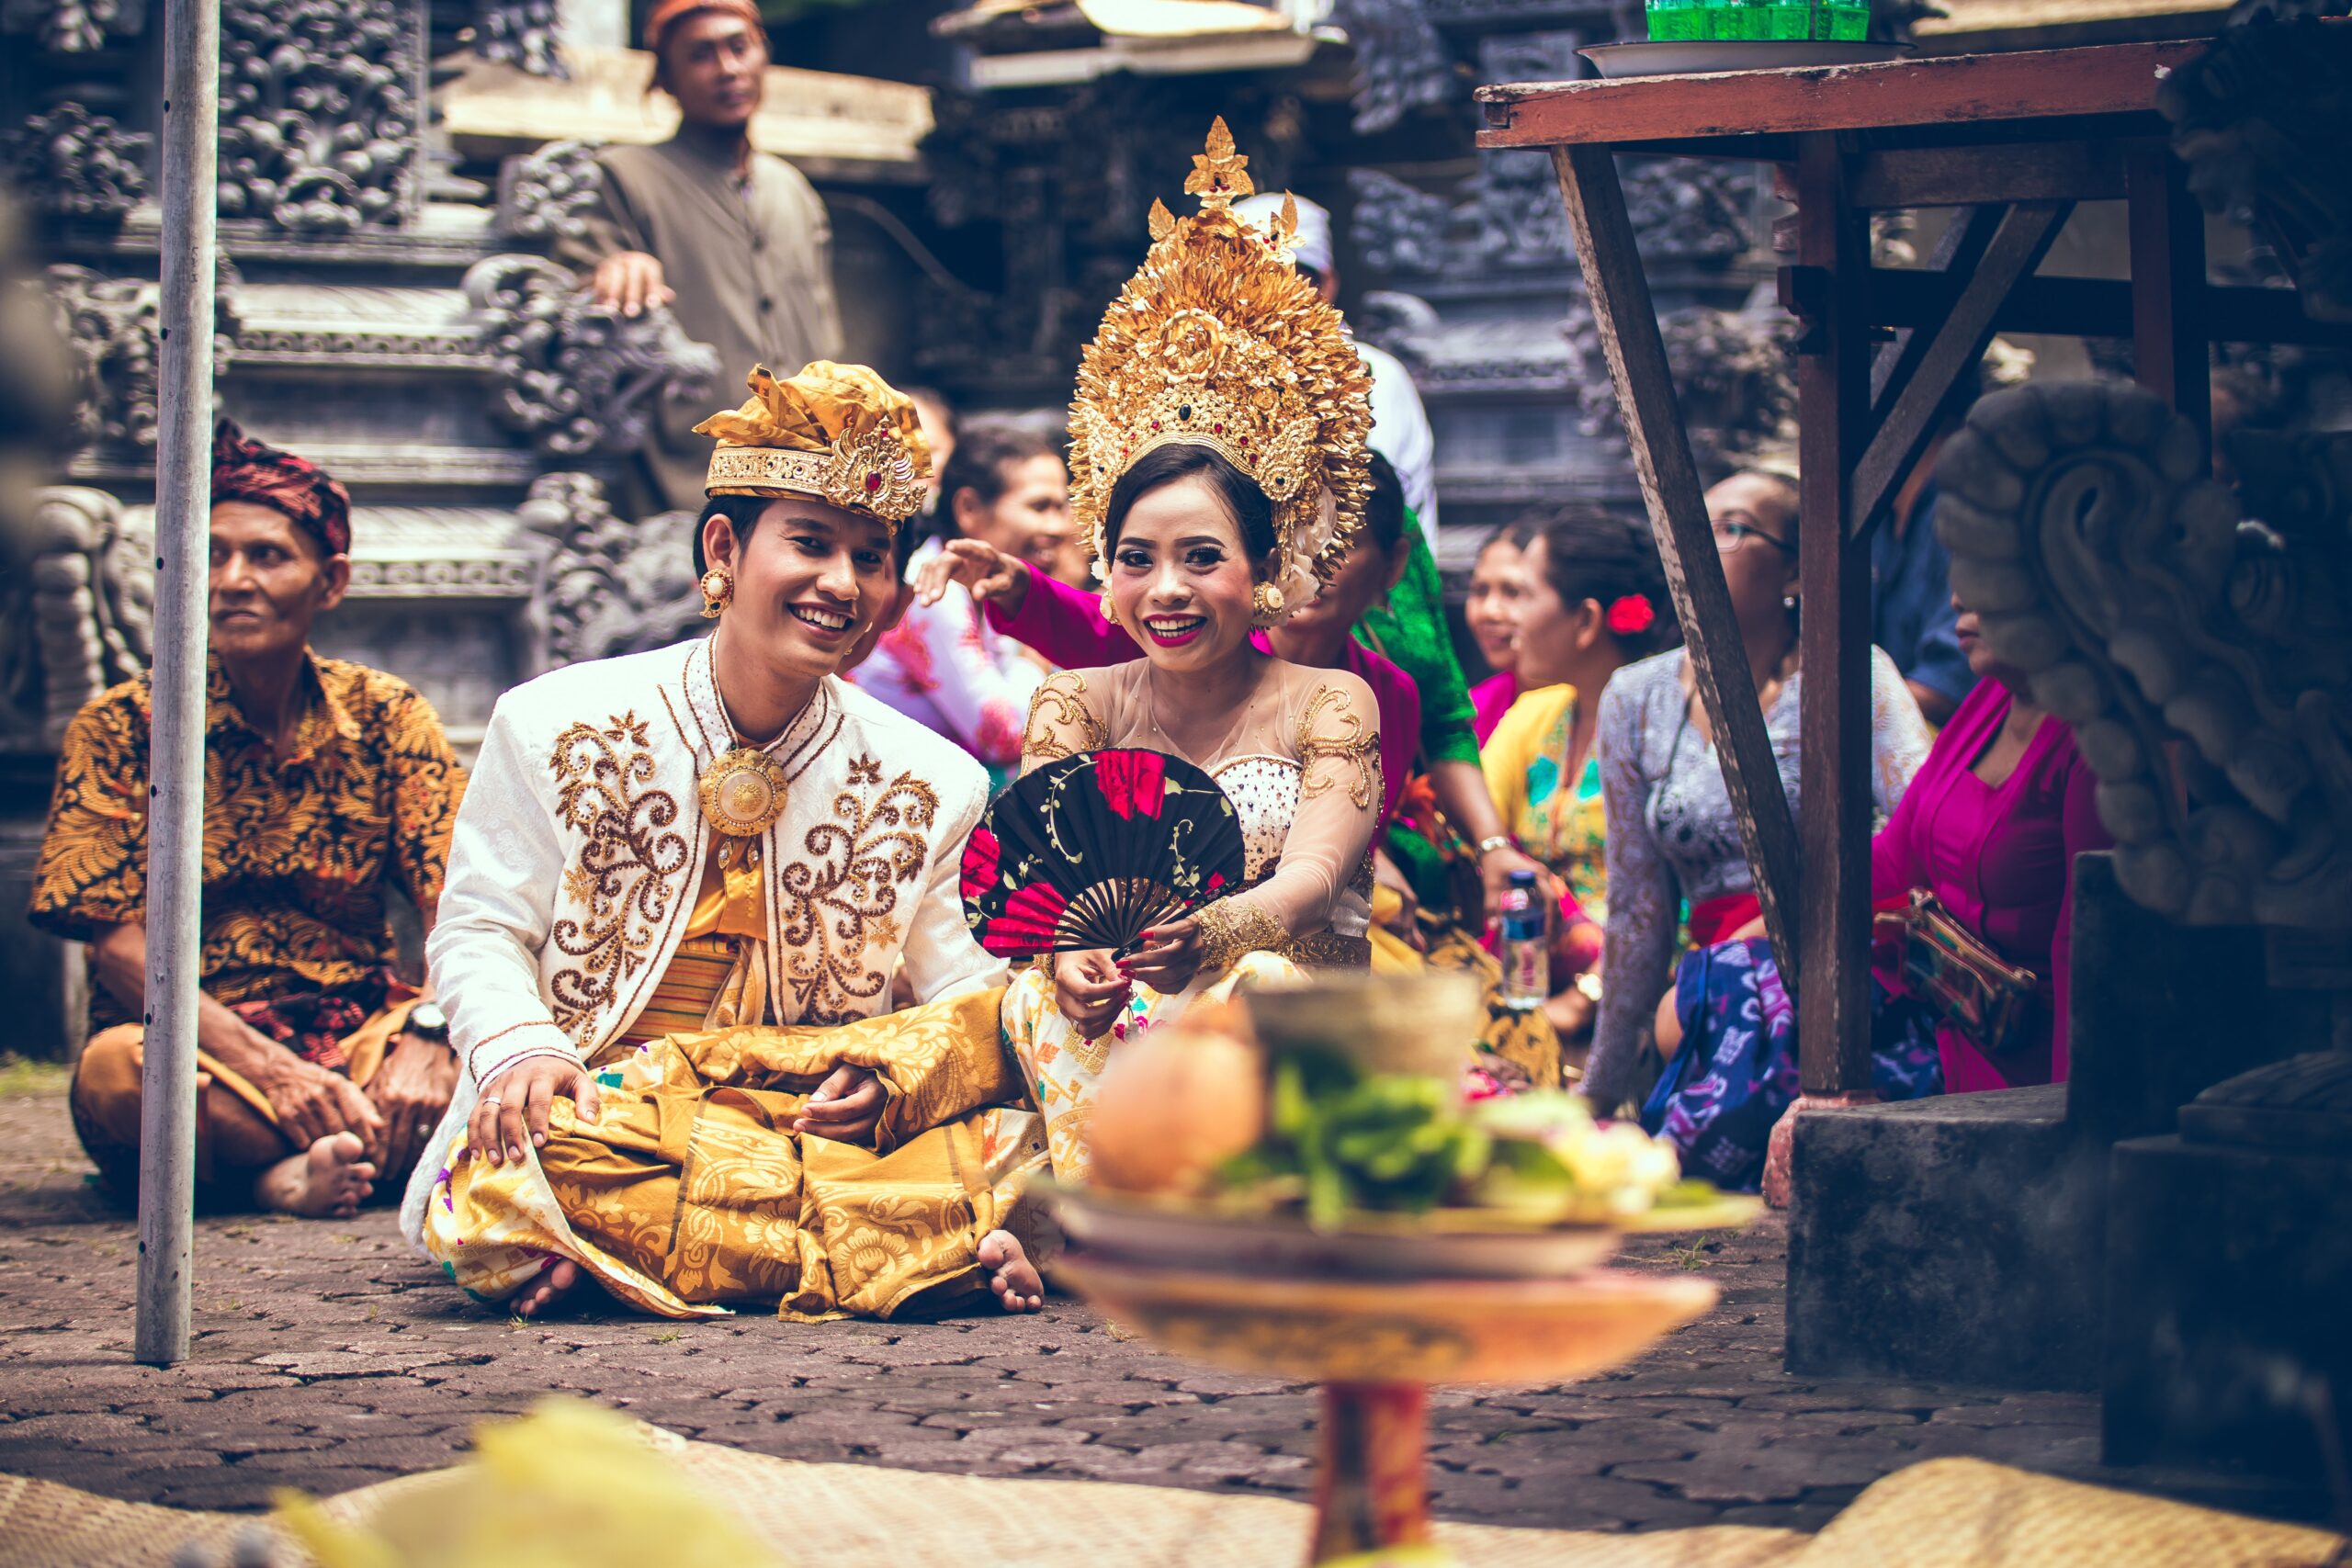 Bali – Island of the gods